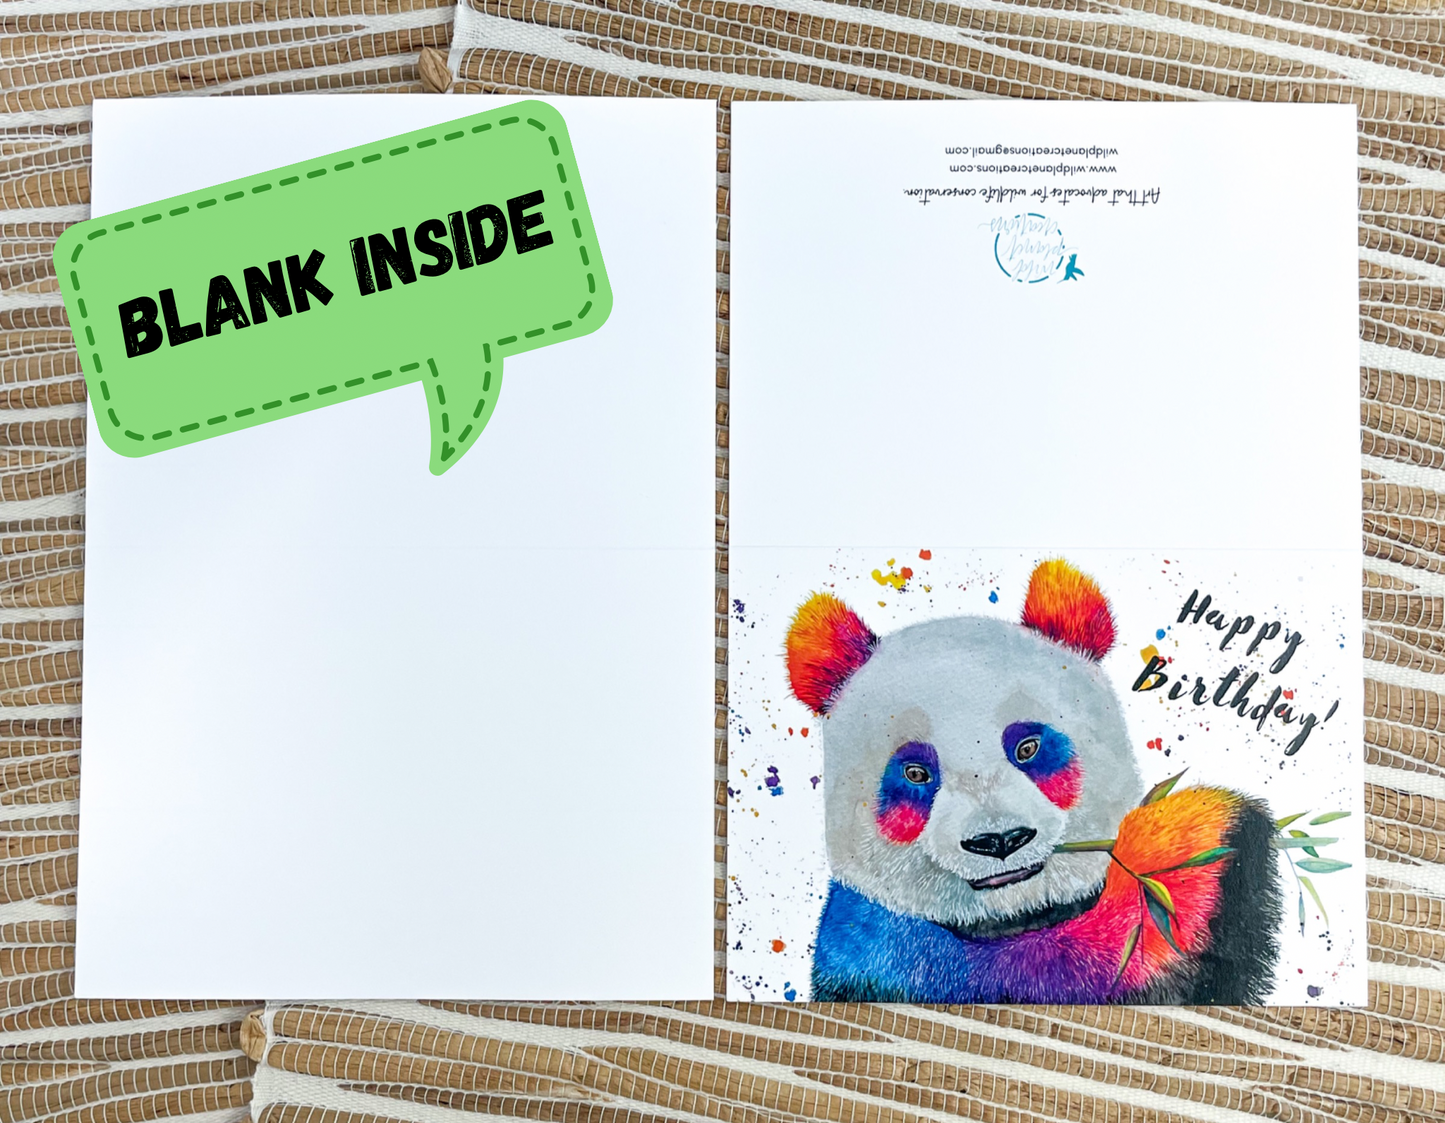 Giant Panda Greeting Card - "Happy Birthday"